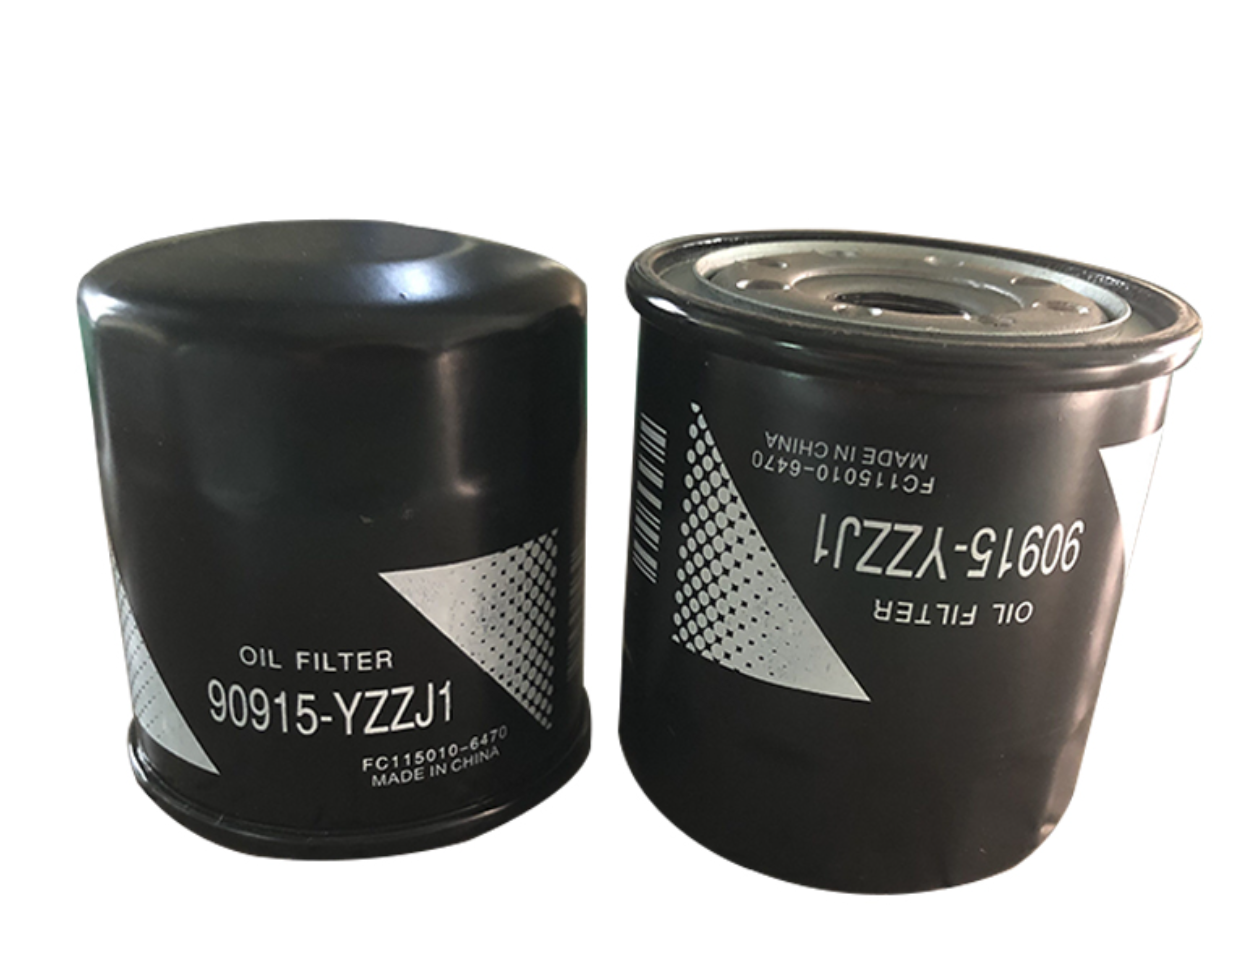 Engine Fuel Filter Oil Filter Diesel Filter spin-on 90915-YZZJ1